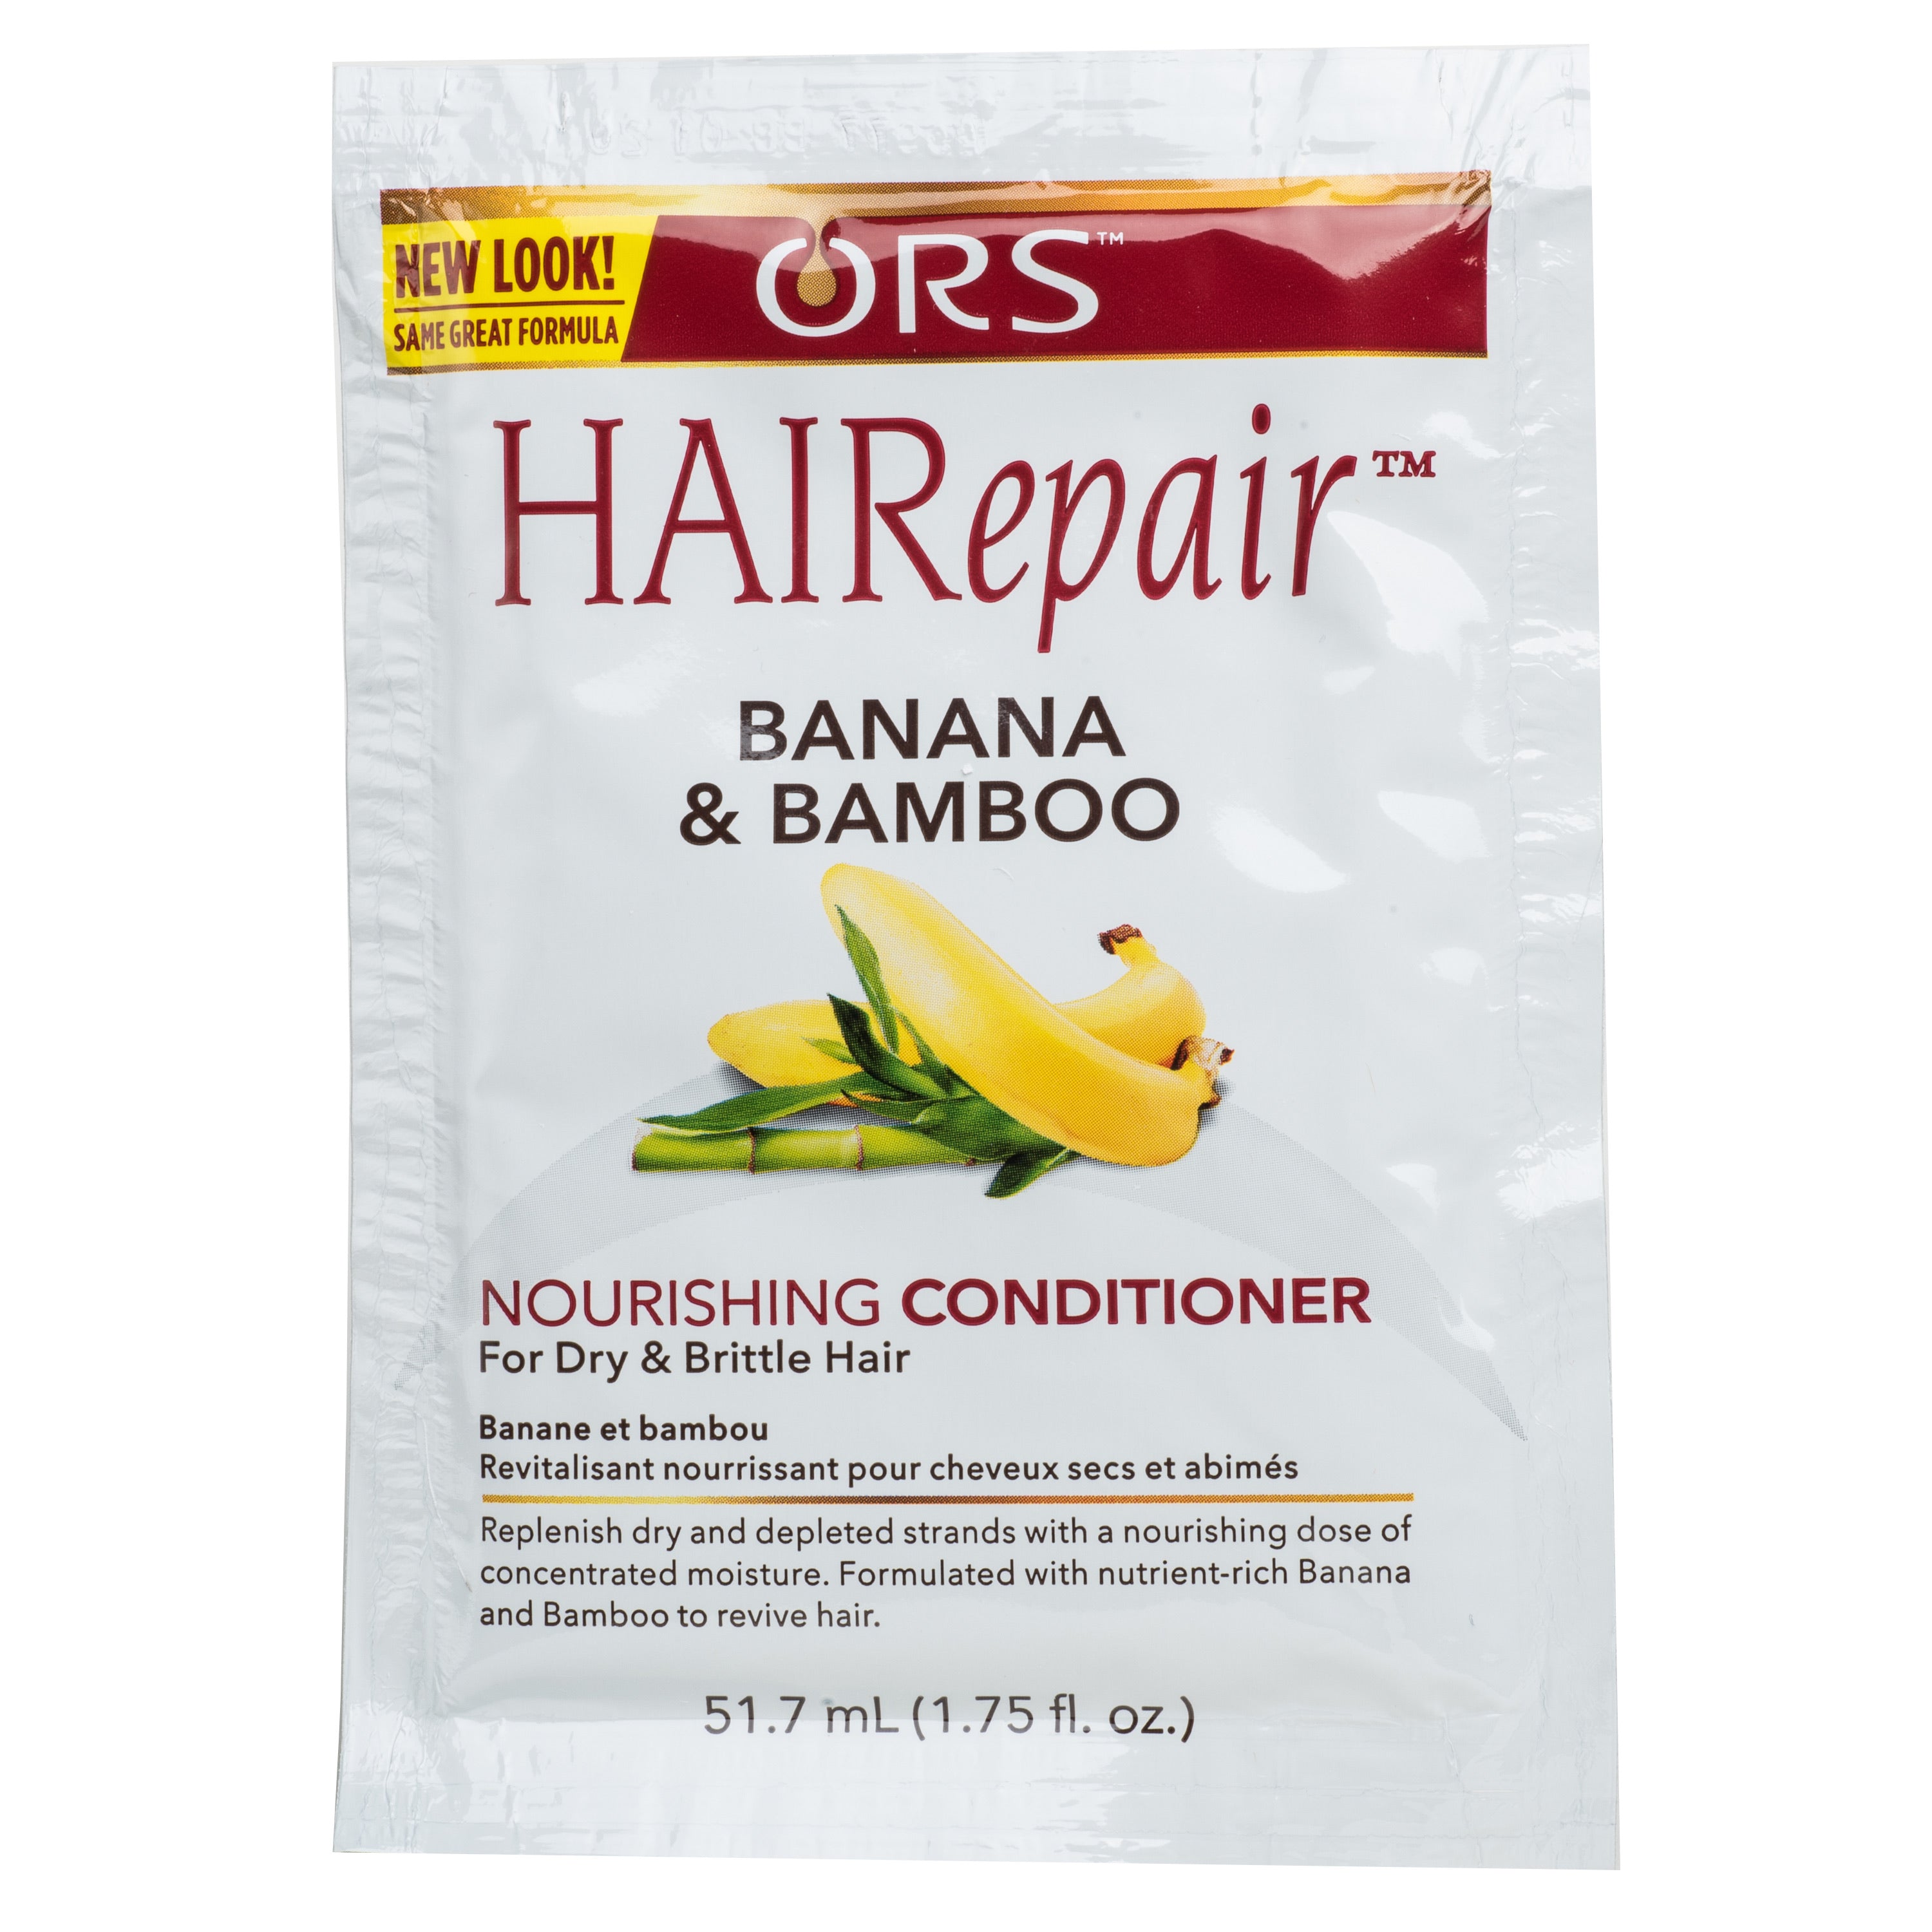 Ors hairepair banana & bamboo conditioner 1.75oz